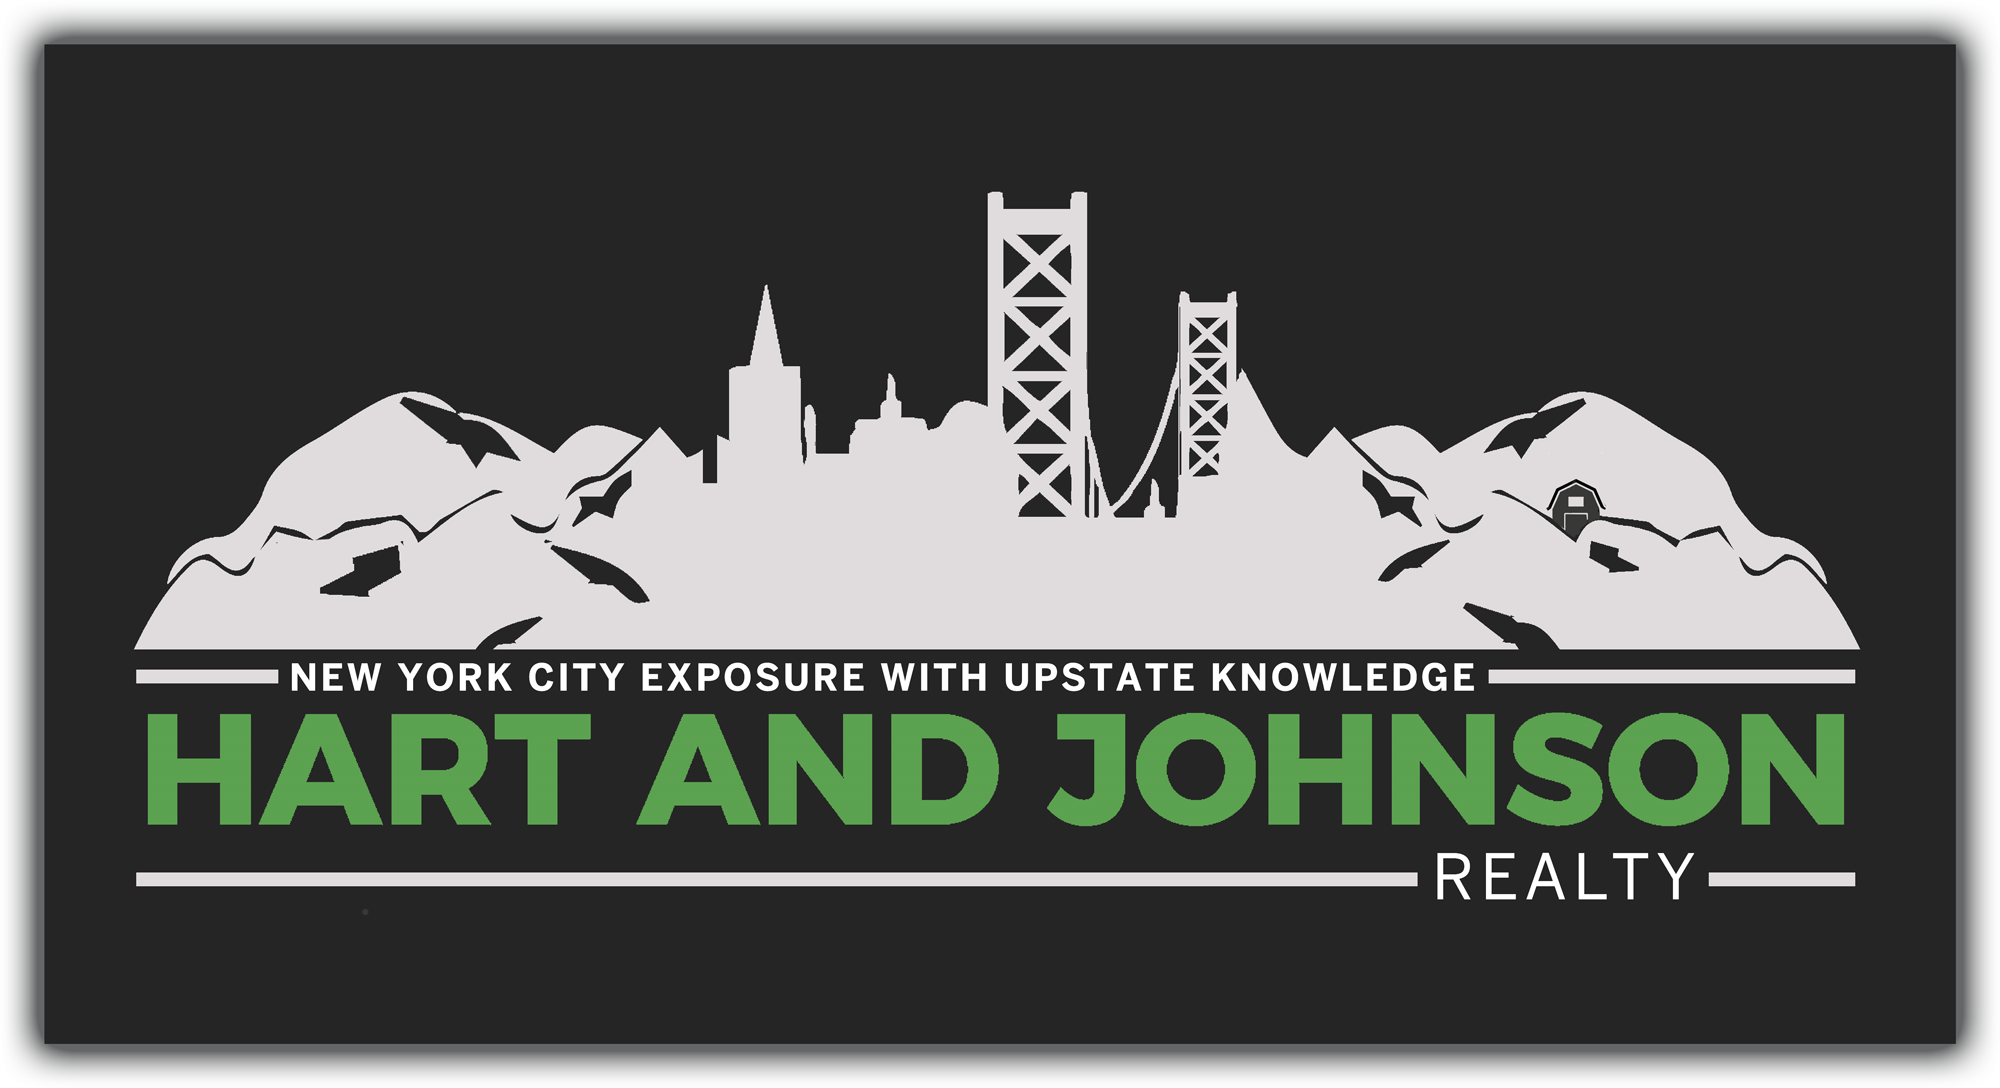 Hart & Johnson Realty's website